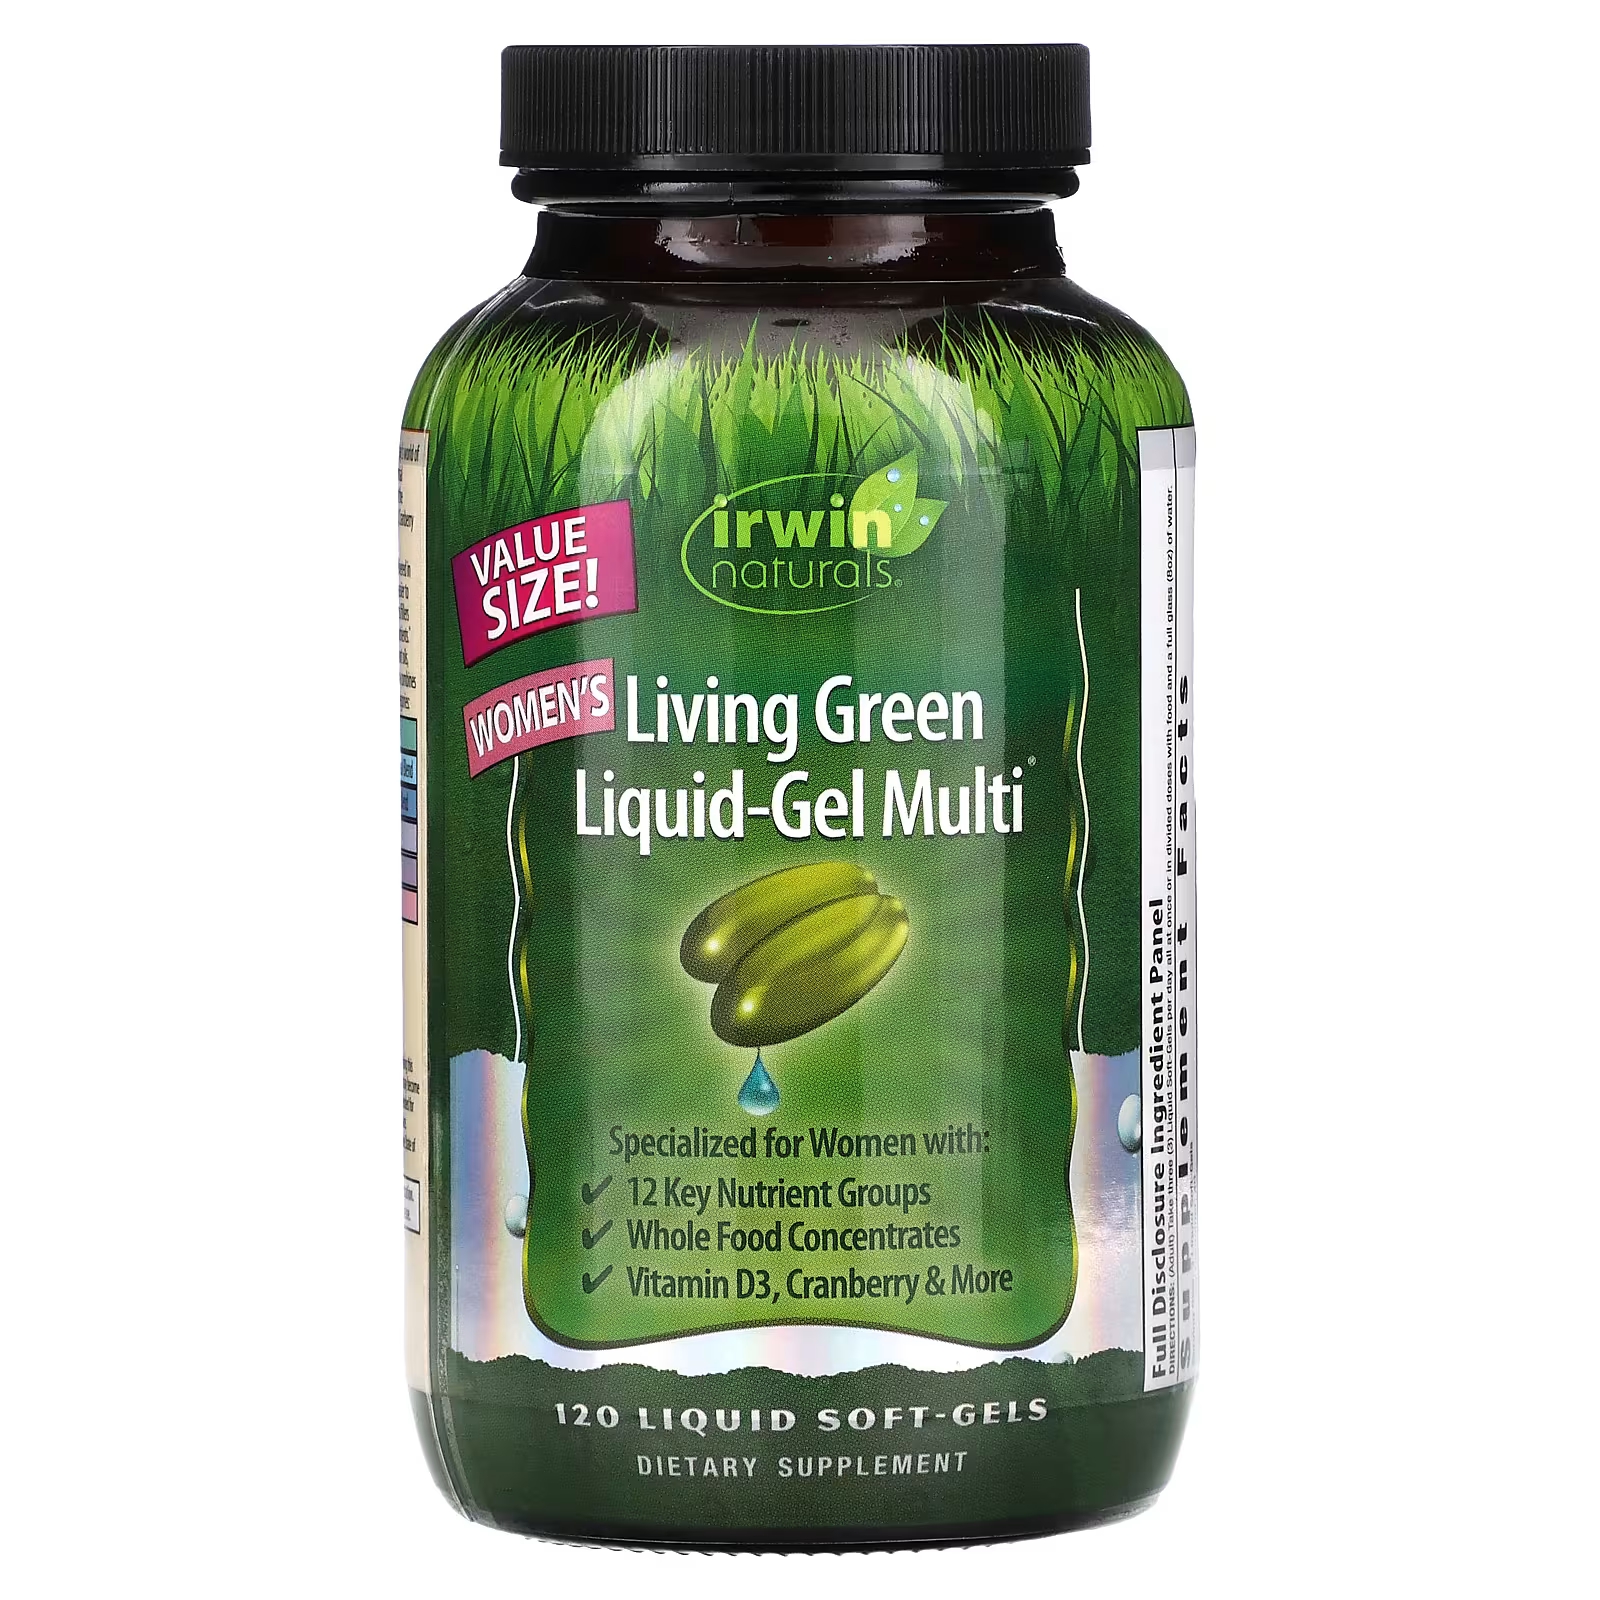 Пищевая добавка Irwin Naturals Women's Living Green Liquid-Gel Multi irwin naturals men s living green liquid gel multi 120 жидких гелевых капсул